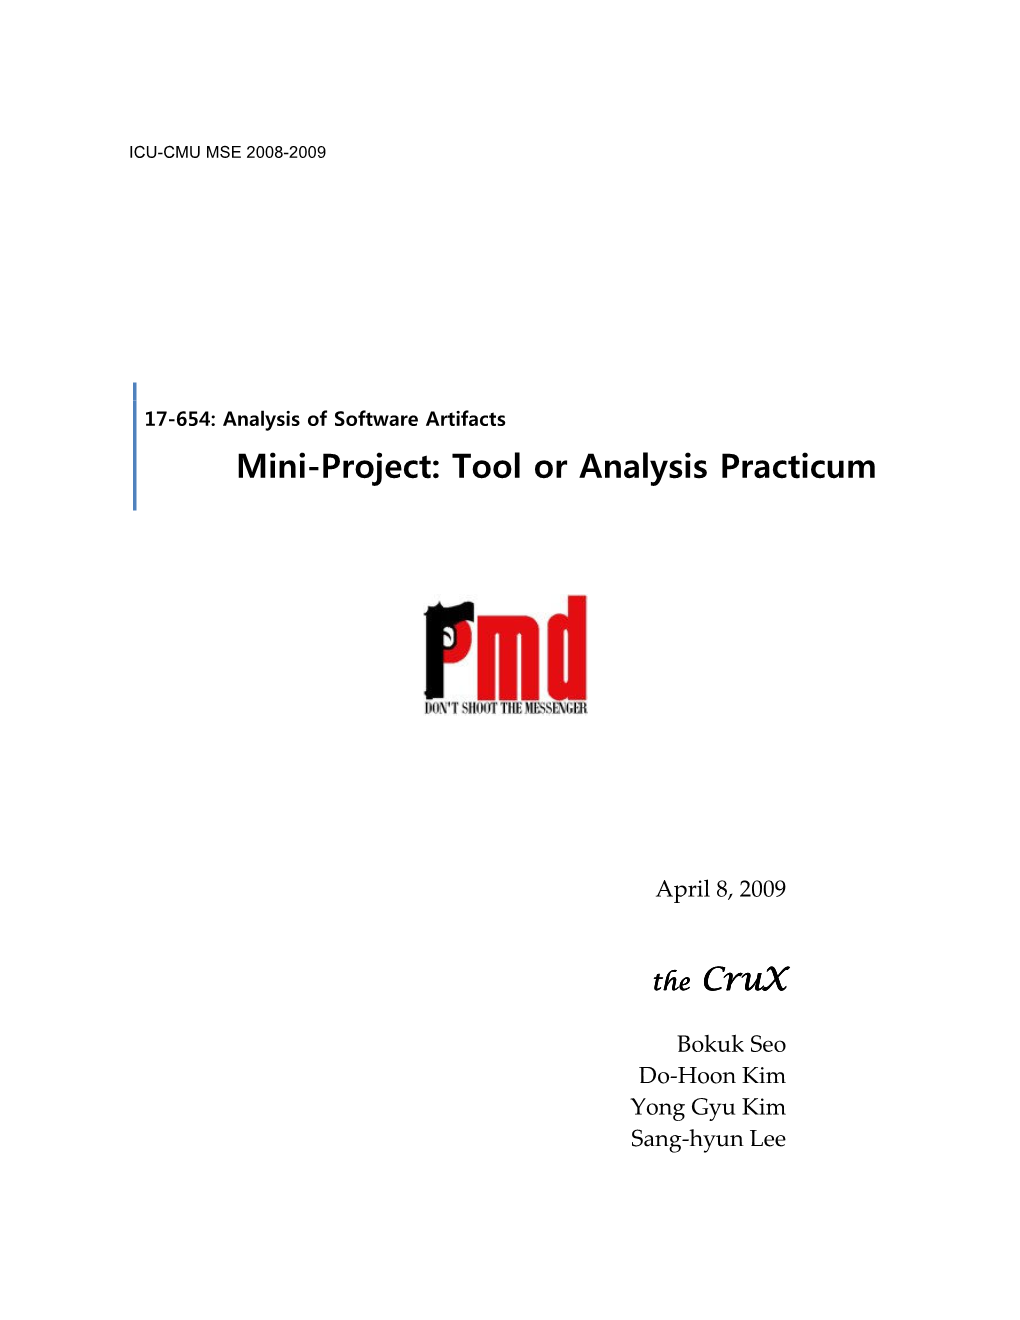 Mini-Project: Tool Or Analysis Practicum